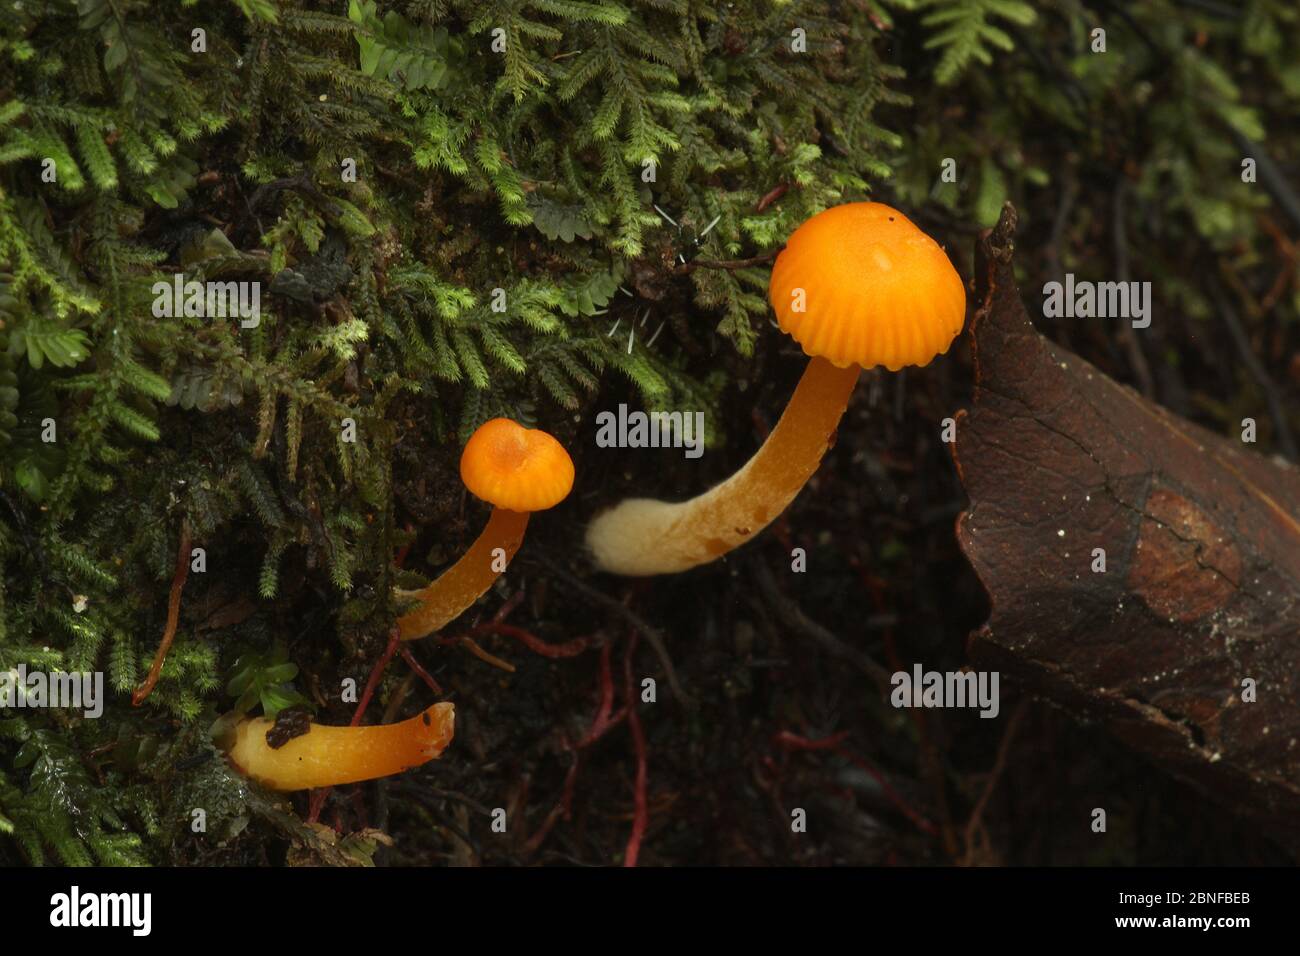 Waxgill fungi Agaricales species Stock Photo